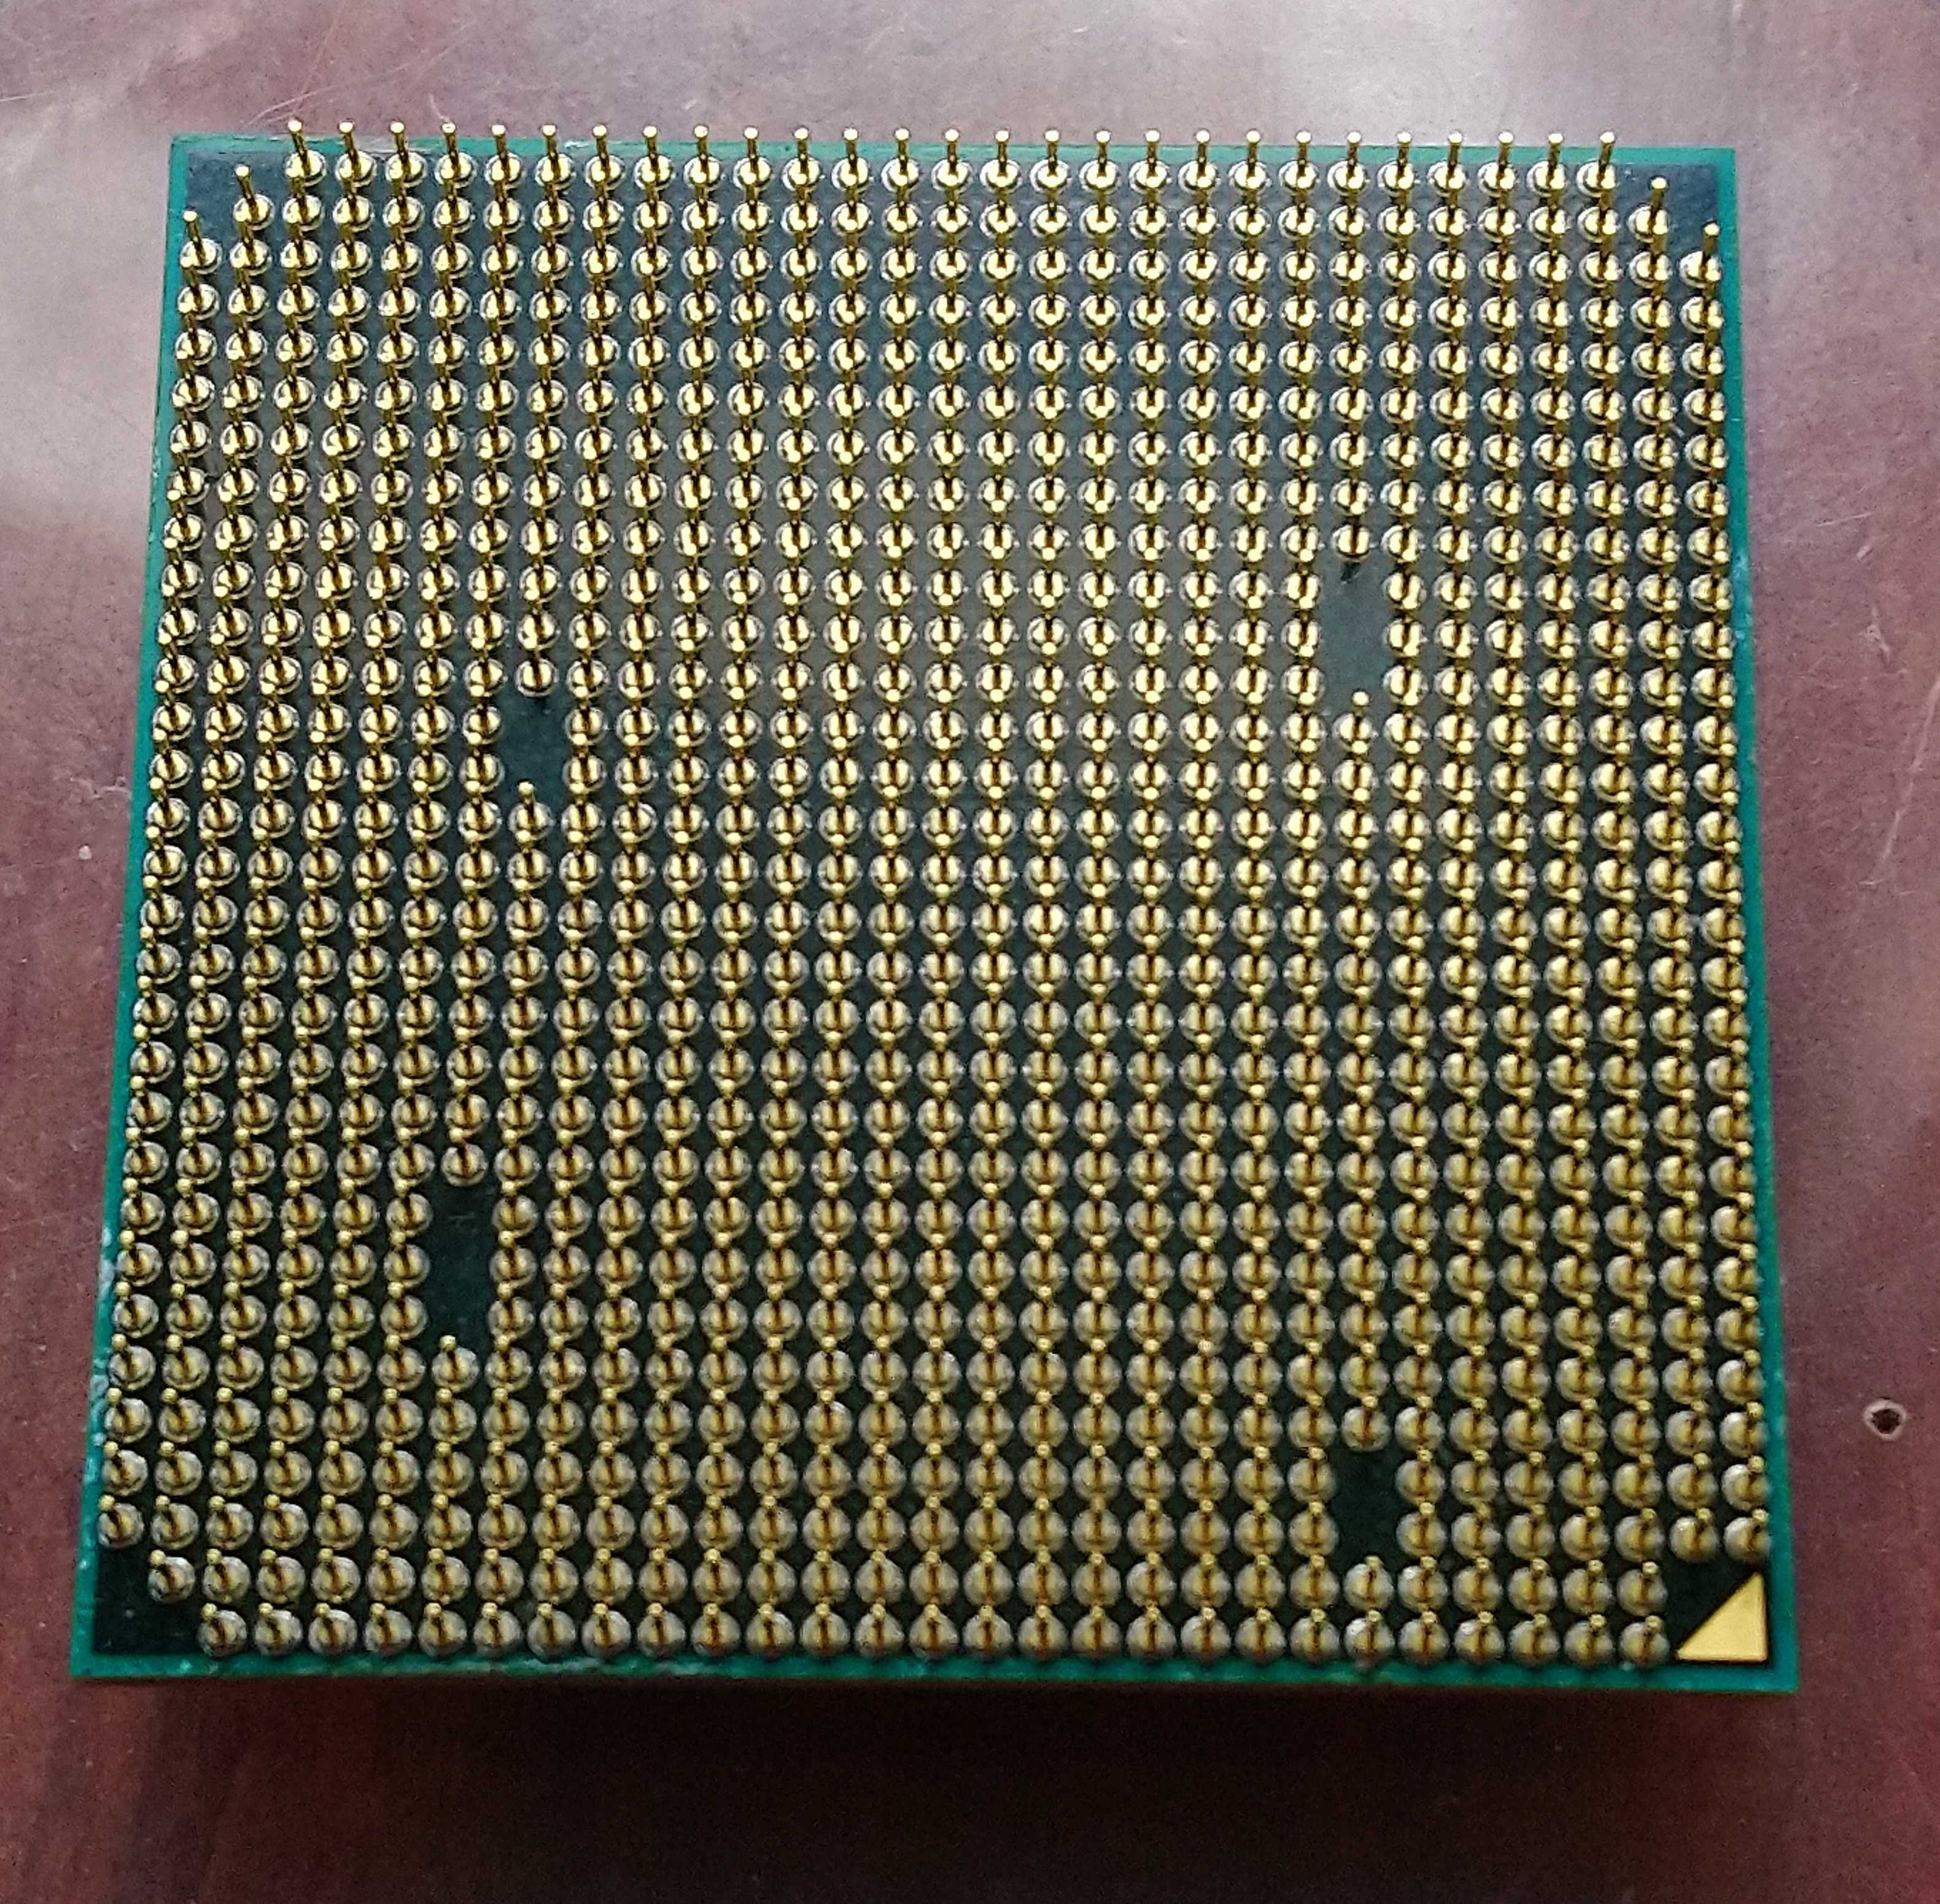 Процессор - AMD Phenom II X4 965 Black Edition